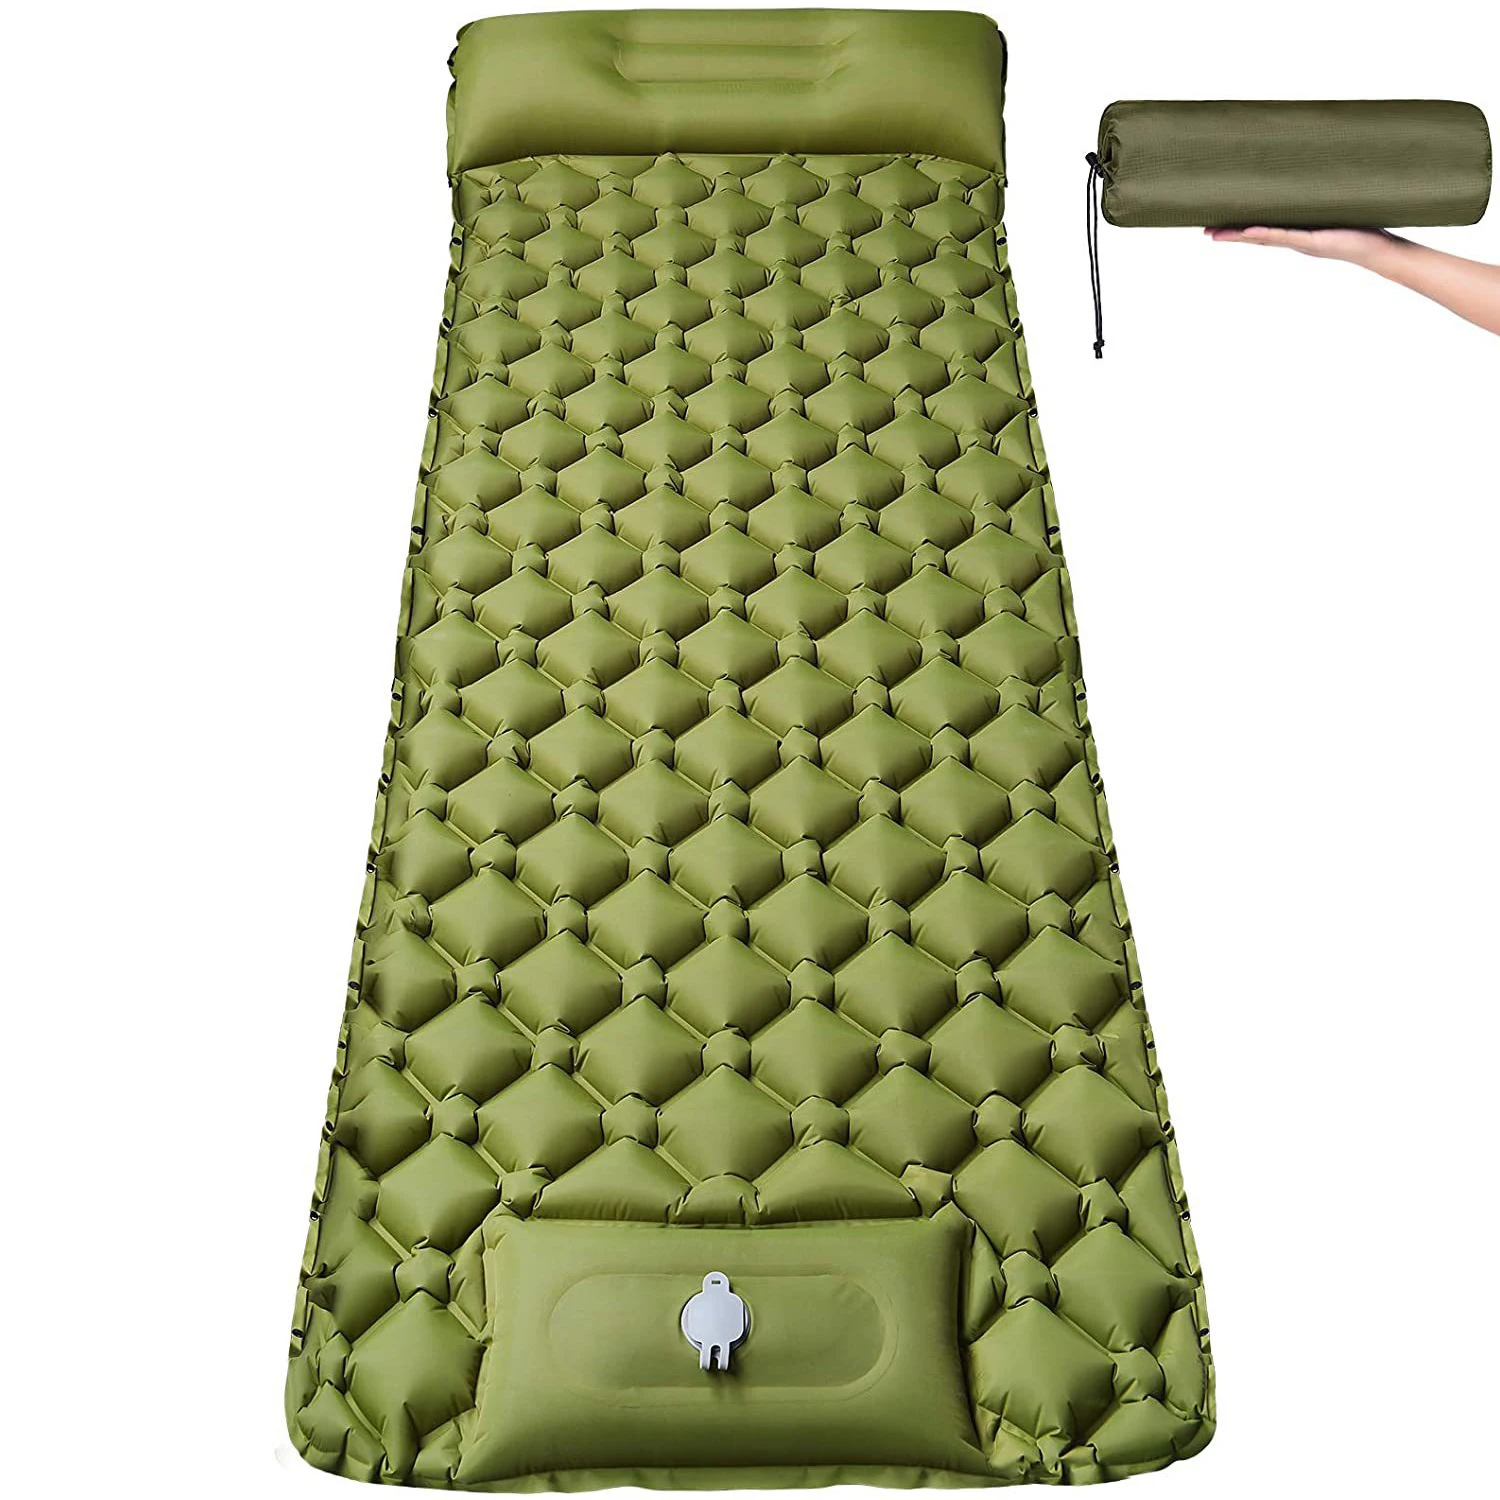 

Ultralight Inflatable Mattress Camping Single Sleeping Pad Camp Bed Self-inflating Mats Travel Hiking Picnic Blanket Beach Mat